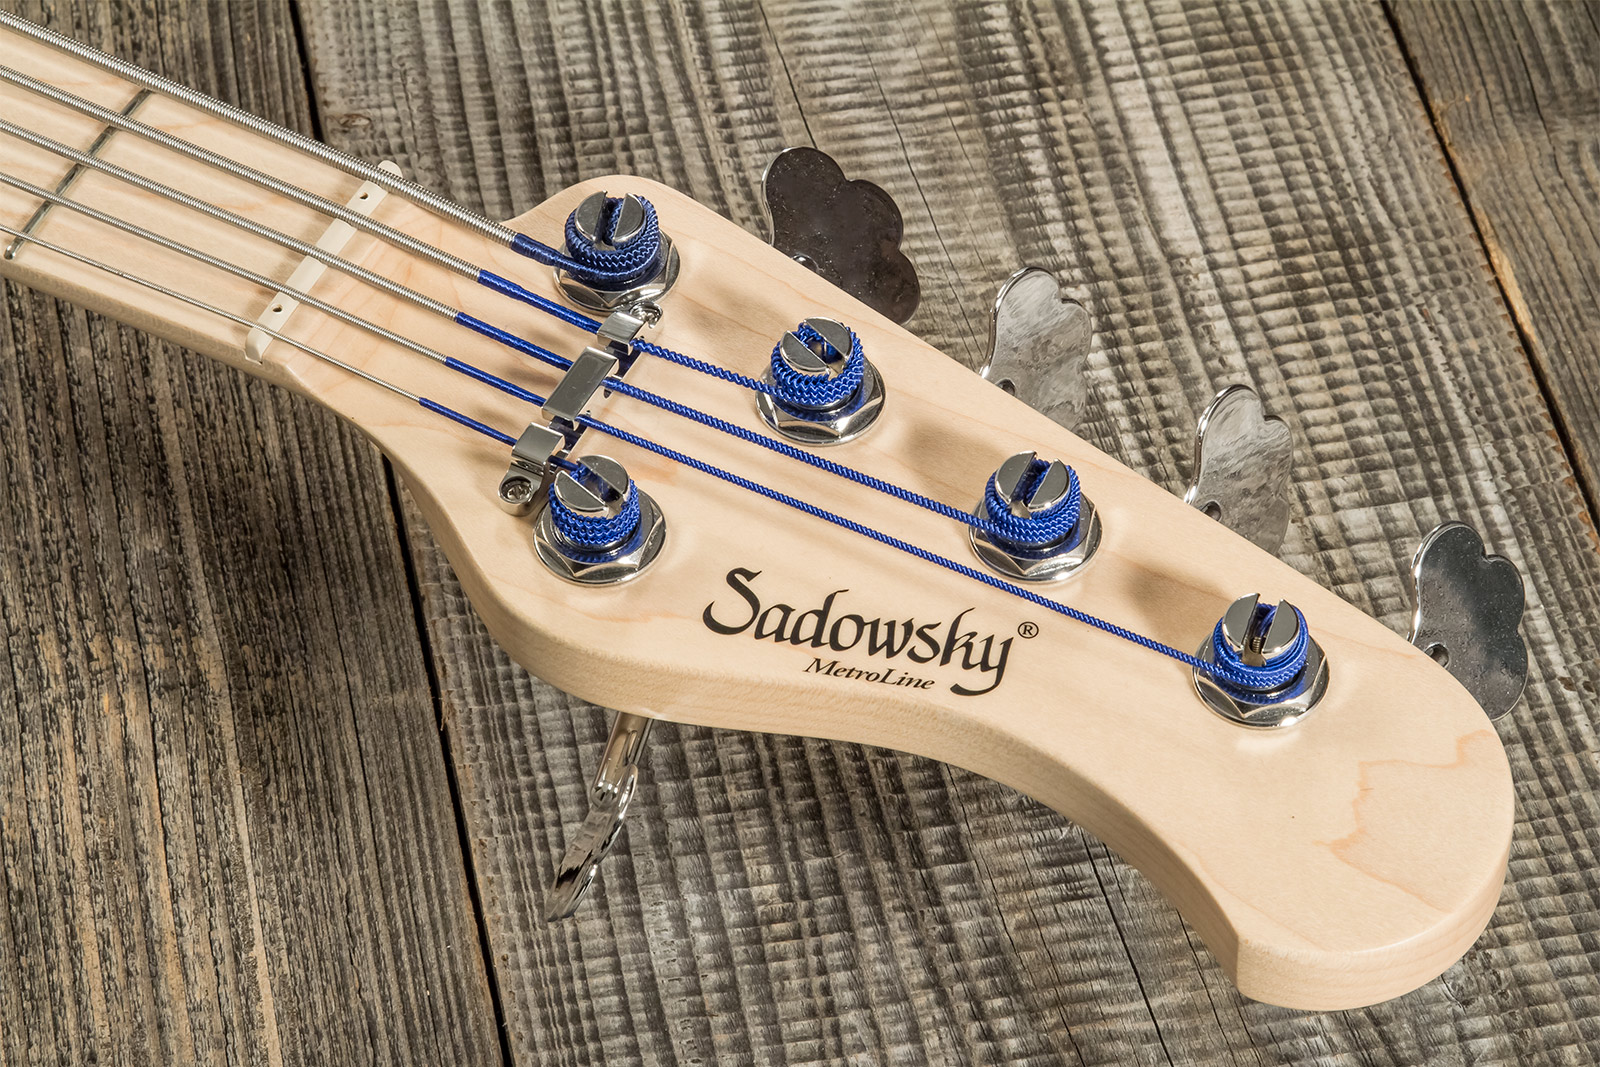 Sadowsky Single Cut Bass 24f Ash 5c Metroline All Active Mn - Satin Black Pearl - Solid body electric bass - Variation 7